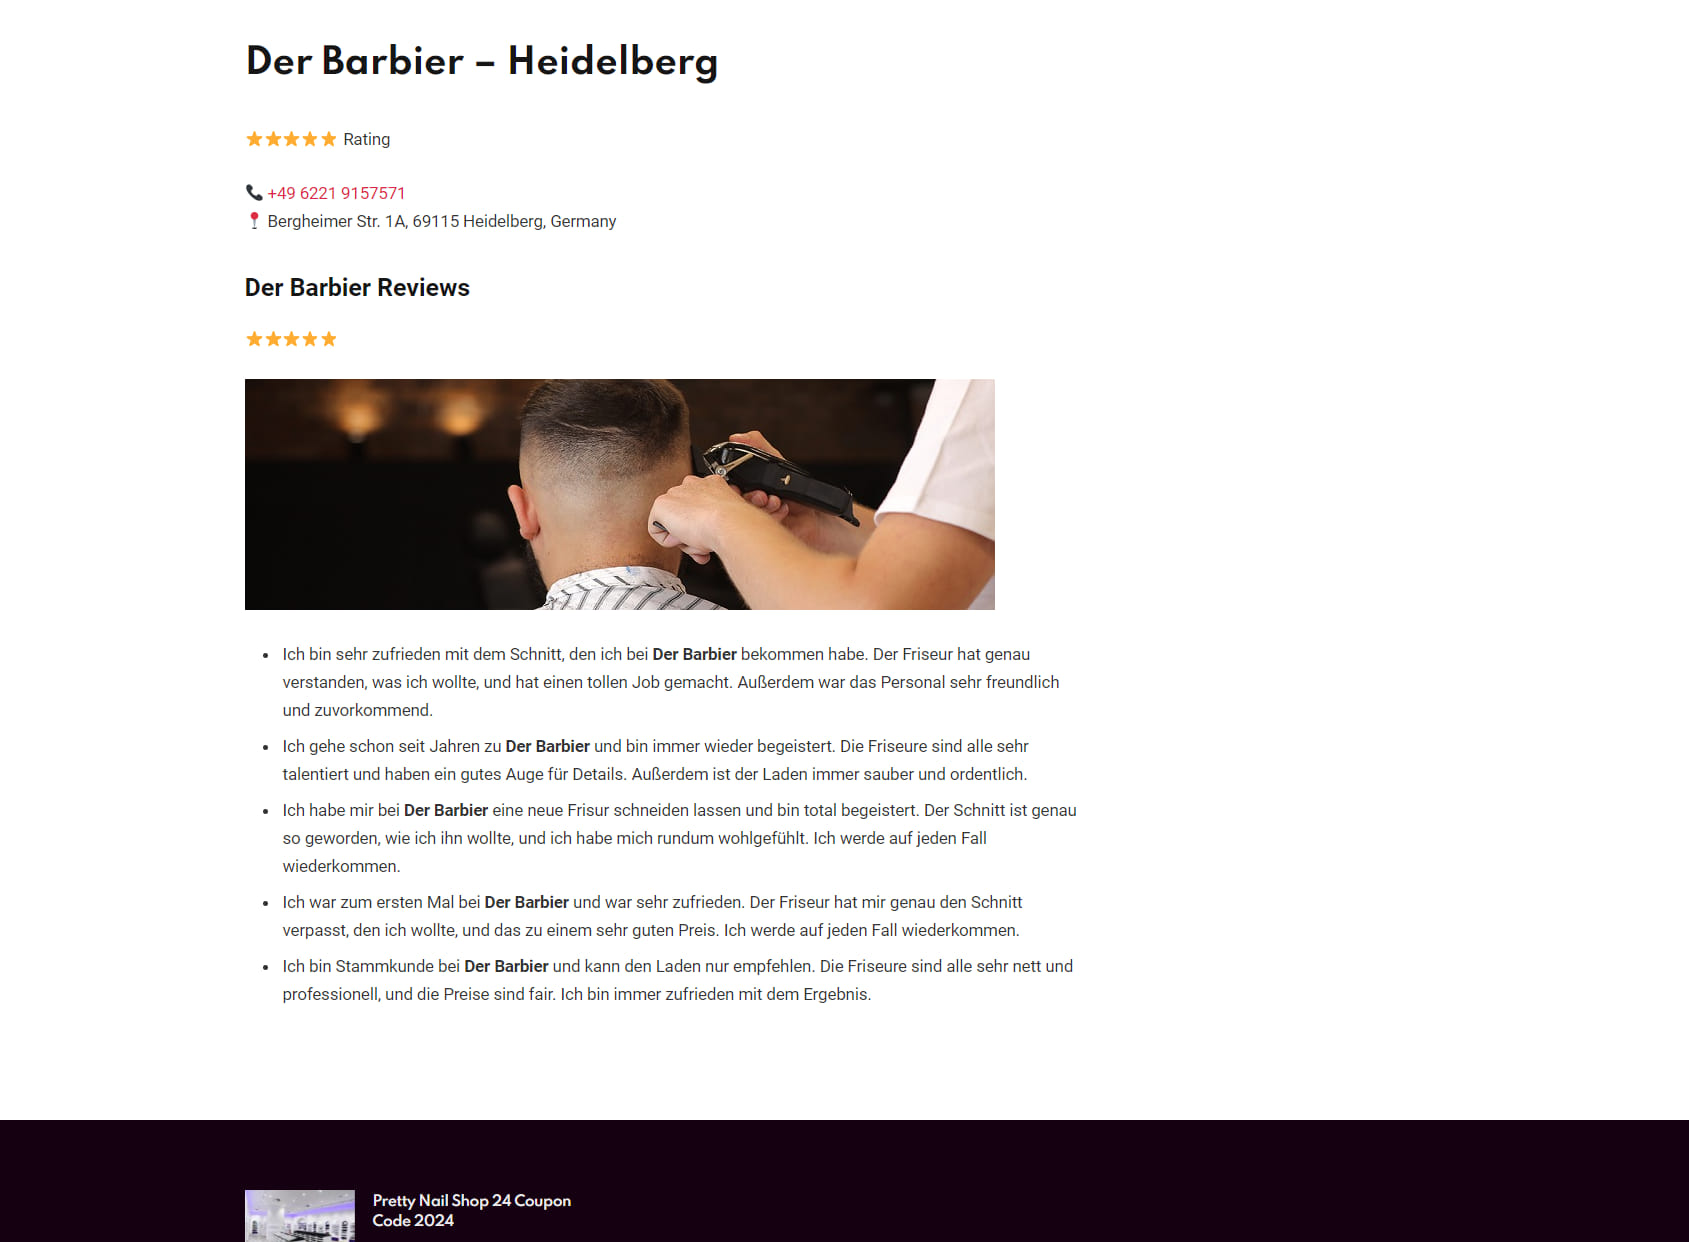 Der Barbier - Heidelberg